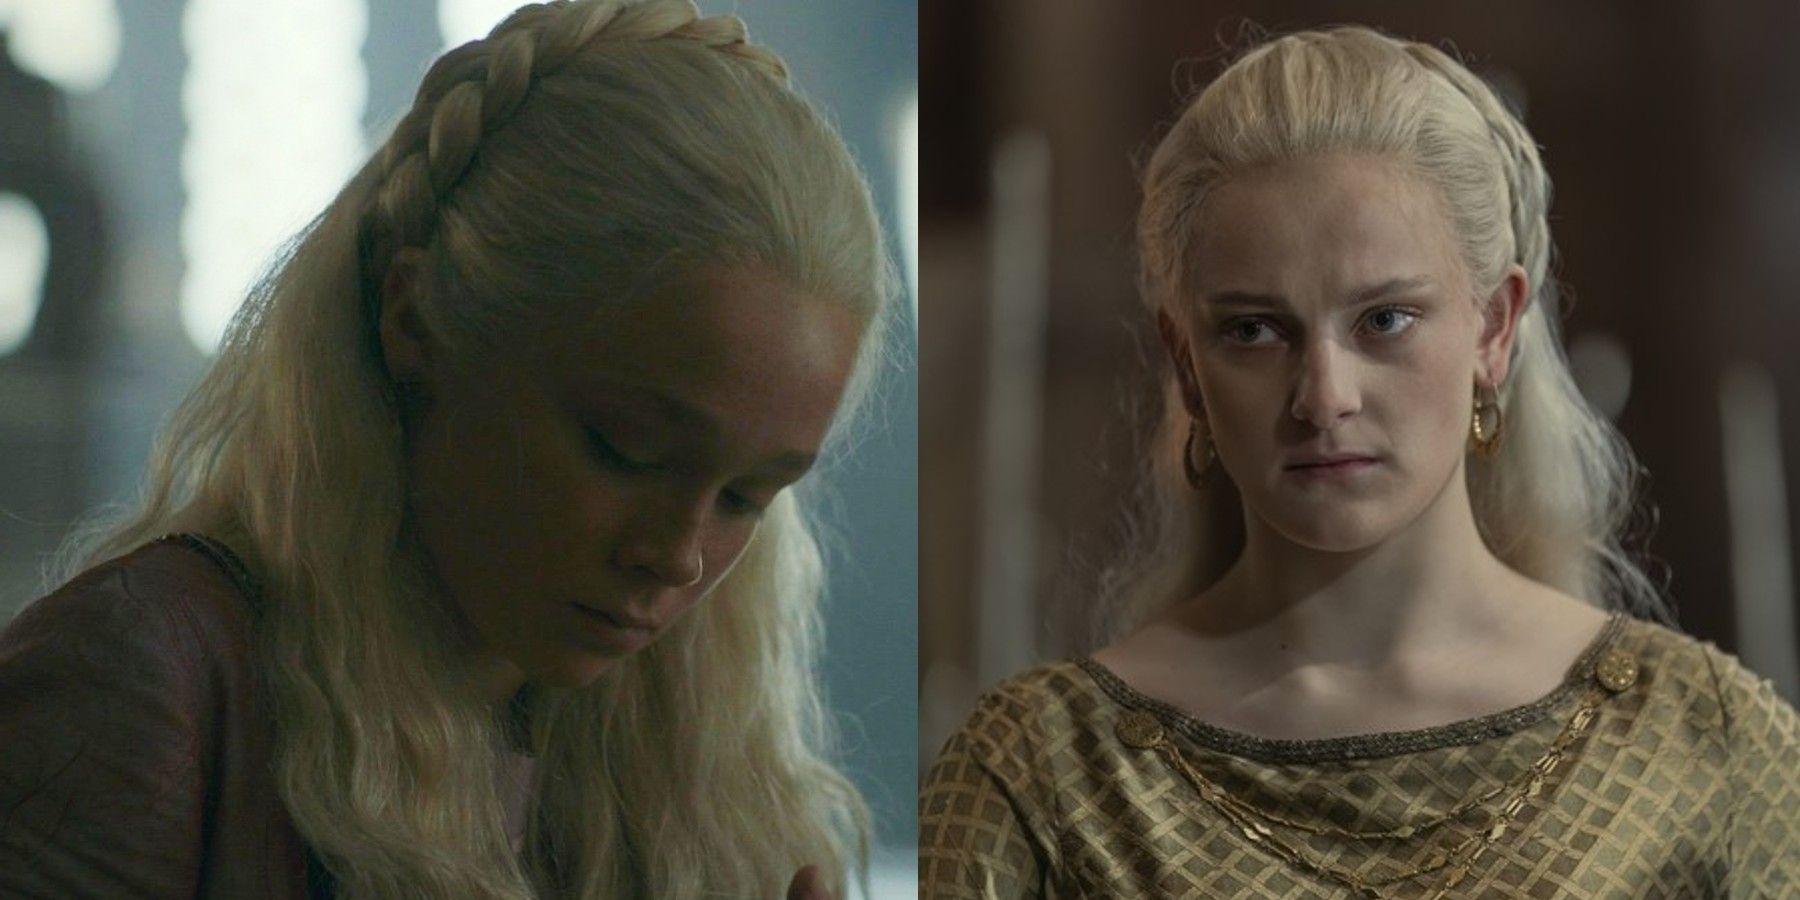 Helaena Targaryen played by Evie Allen and Phia Saban split image